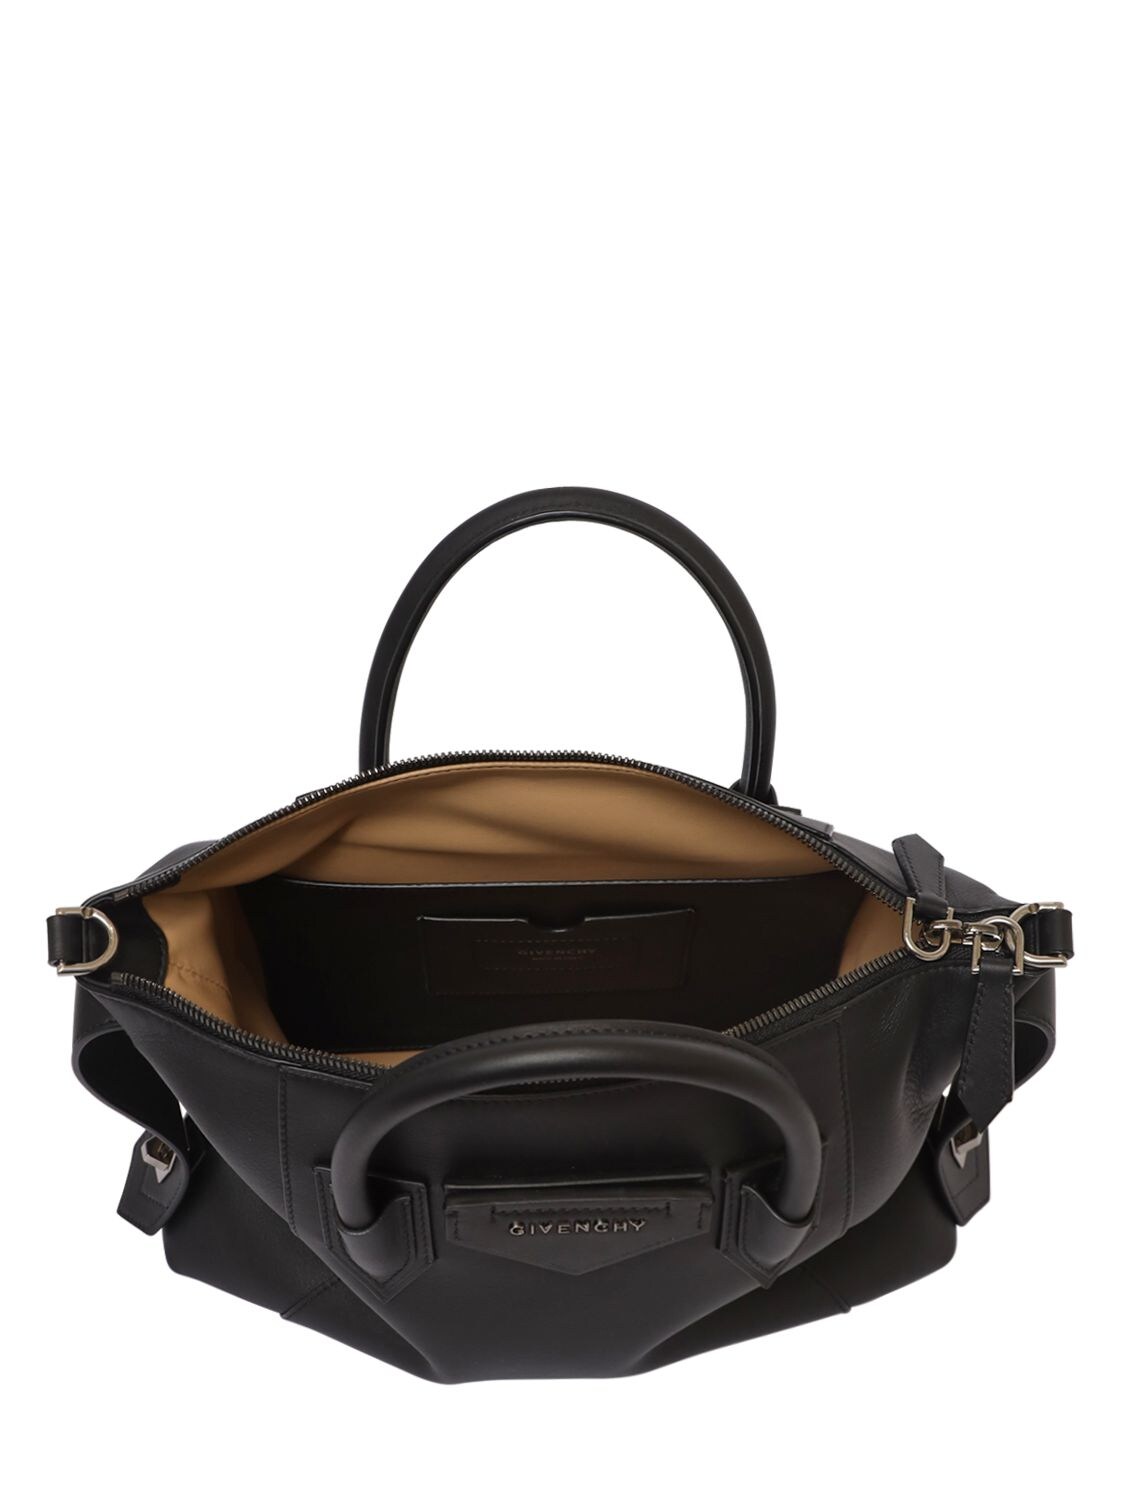 Givenchy Antigona Soft Leather Bag In Black | ModeSens